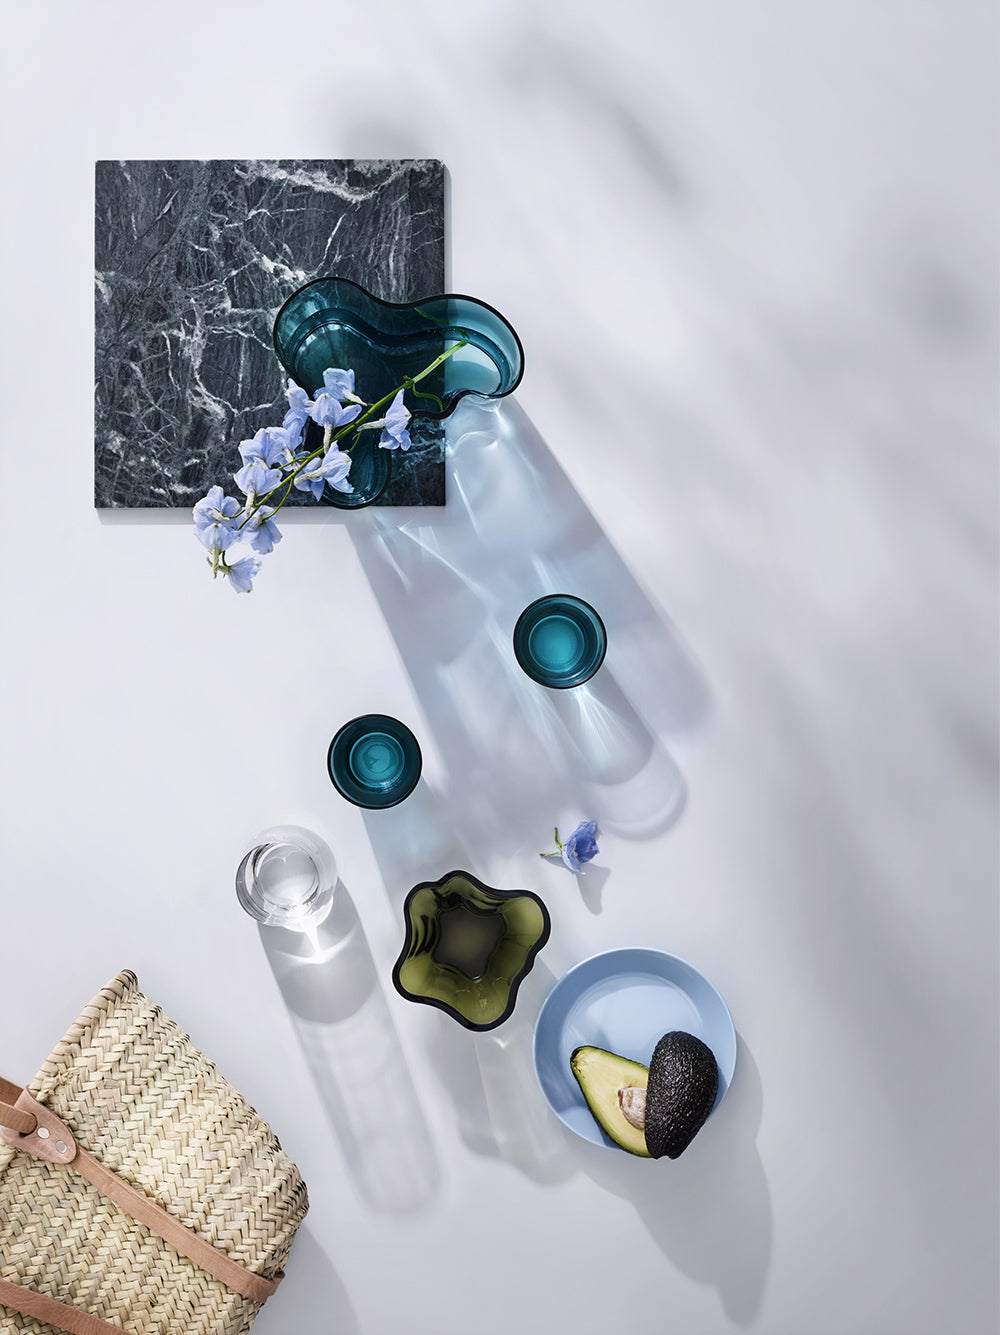 Alvar Aalto Hand Blown Glass Sea Blue Vase 16cm